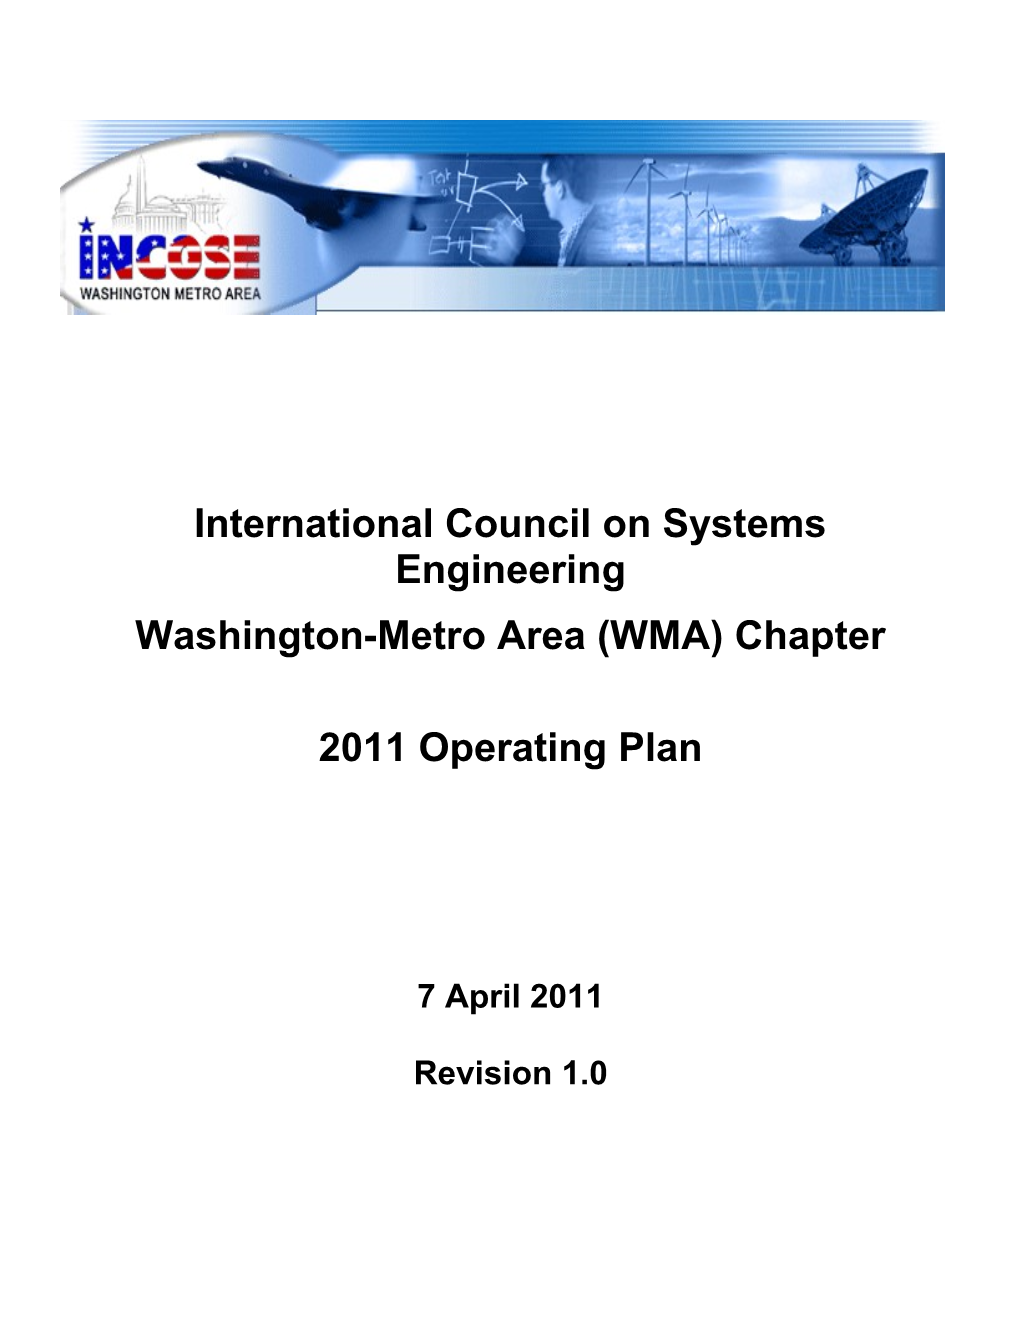 INCOSE-WMA Operating Plan